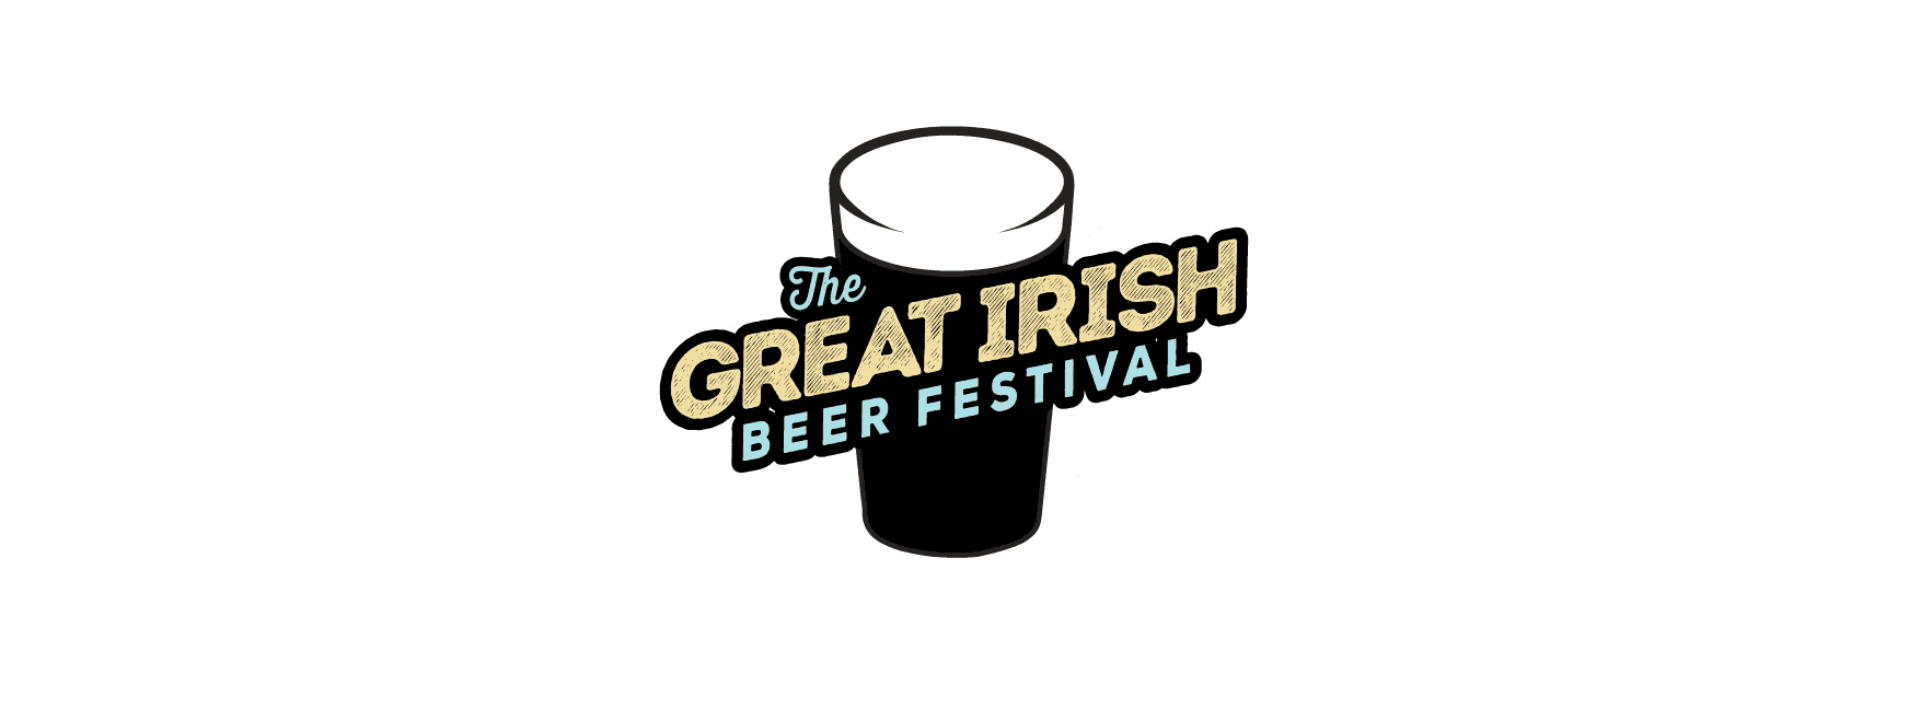 Great Irish Beer Festival presents Stiff Little Fingers - 40th Anniversary Tour